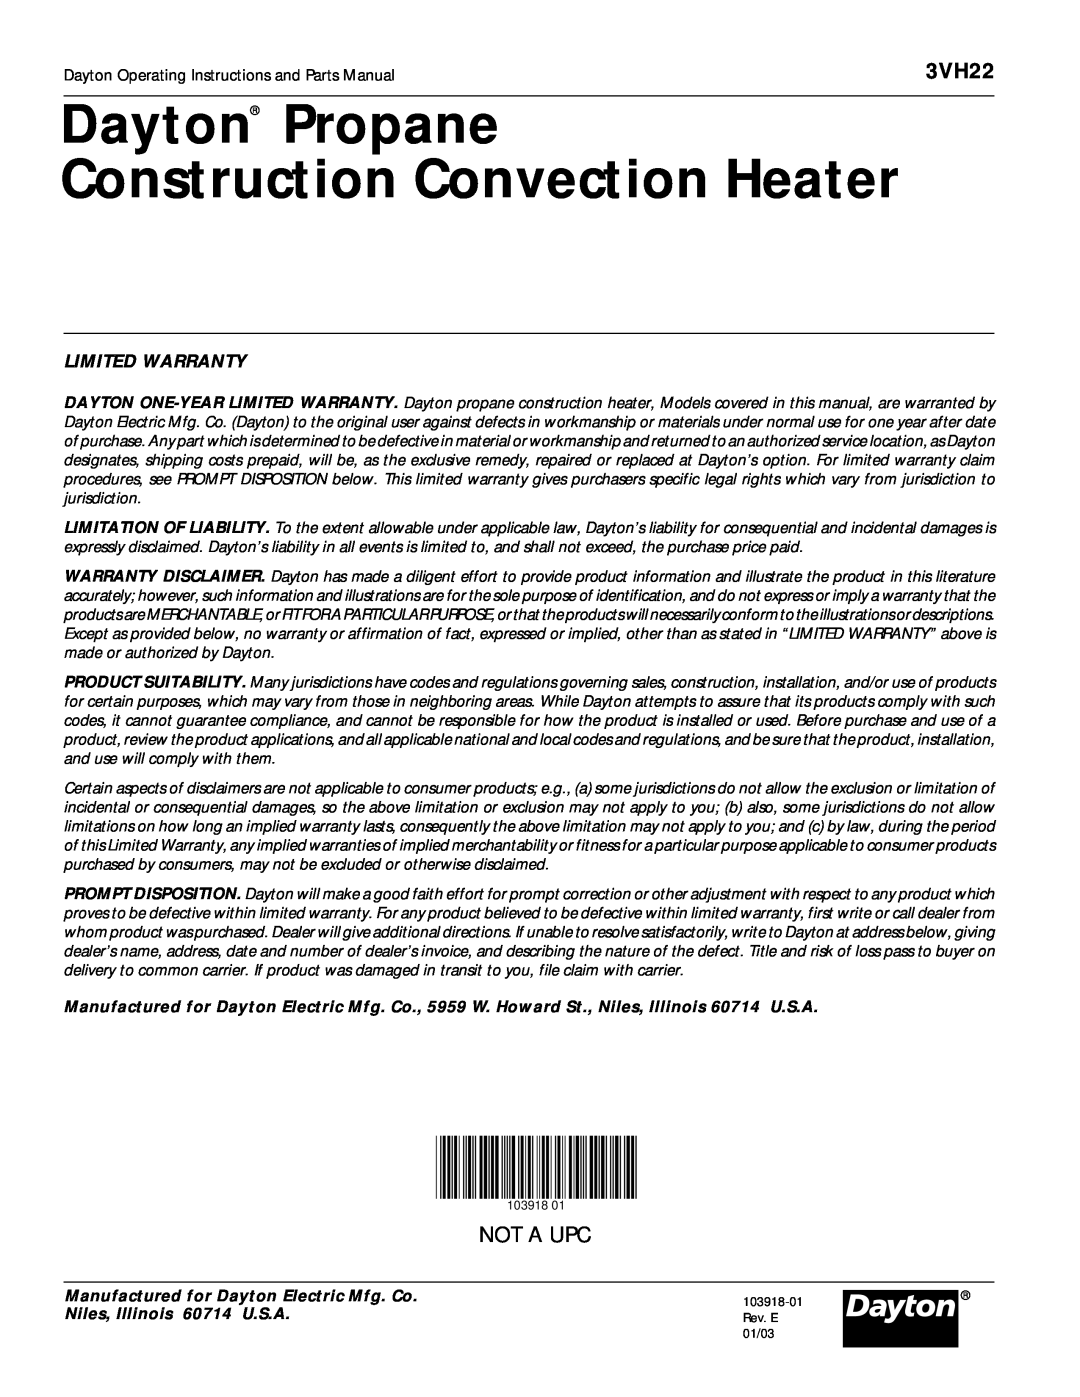 Desa 3VH22 instruction manual Dayton Propane Construction Convection Heater, Not A Upc, Limited Warranty 